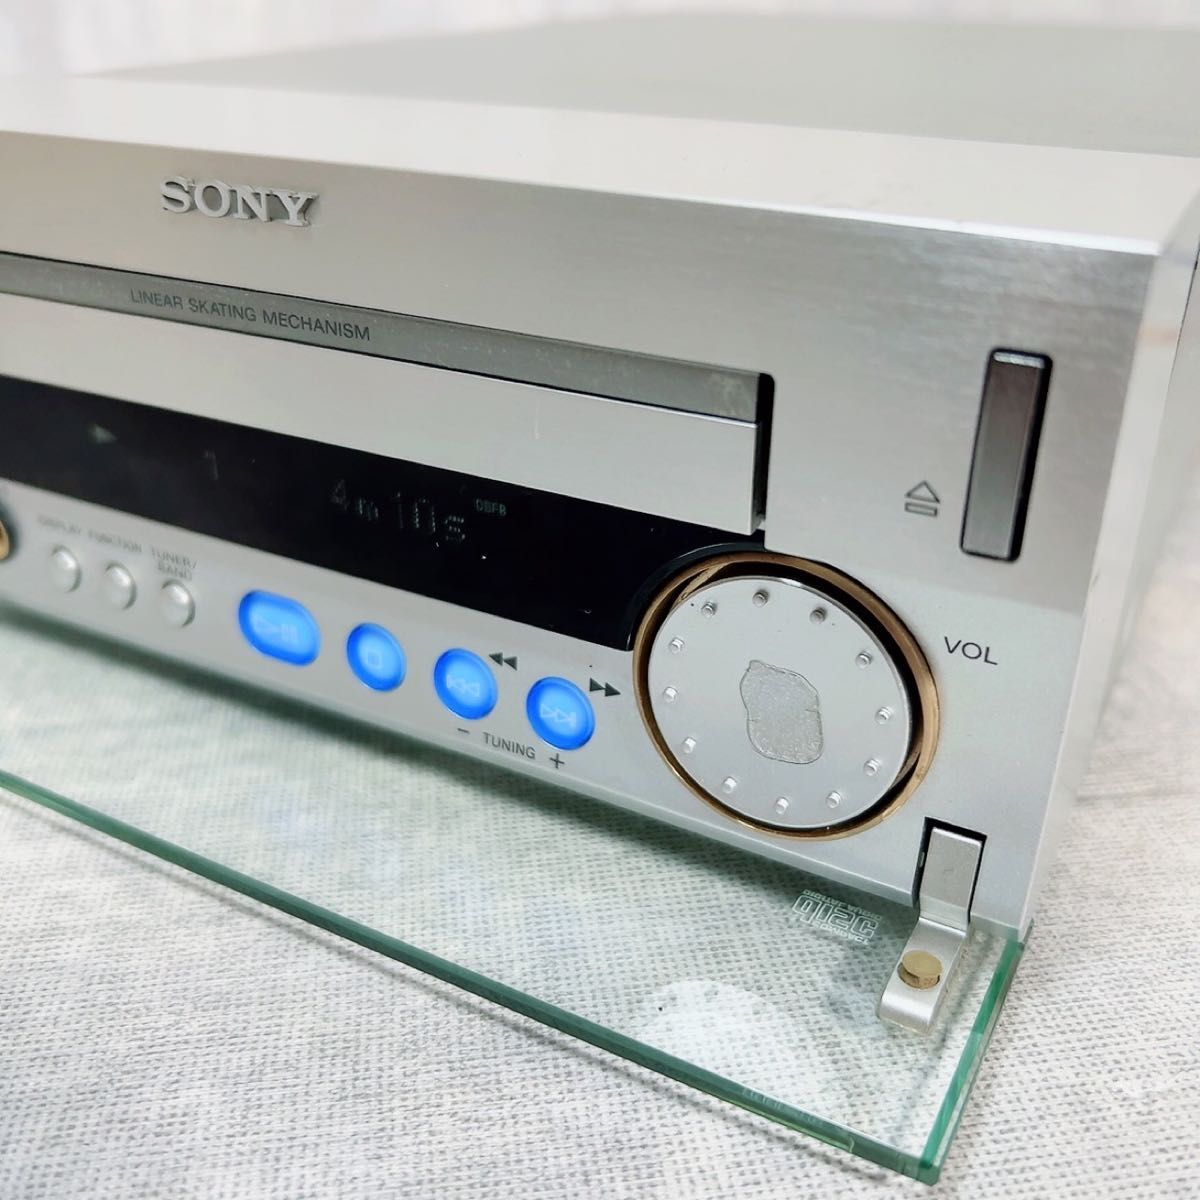 SONY ソニー  HCD-SD1 レシーバー CDデッキ CDレコーダー CDプレーヤー